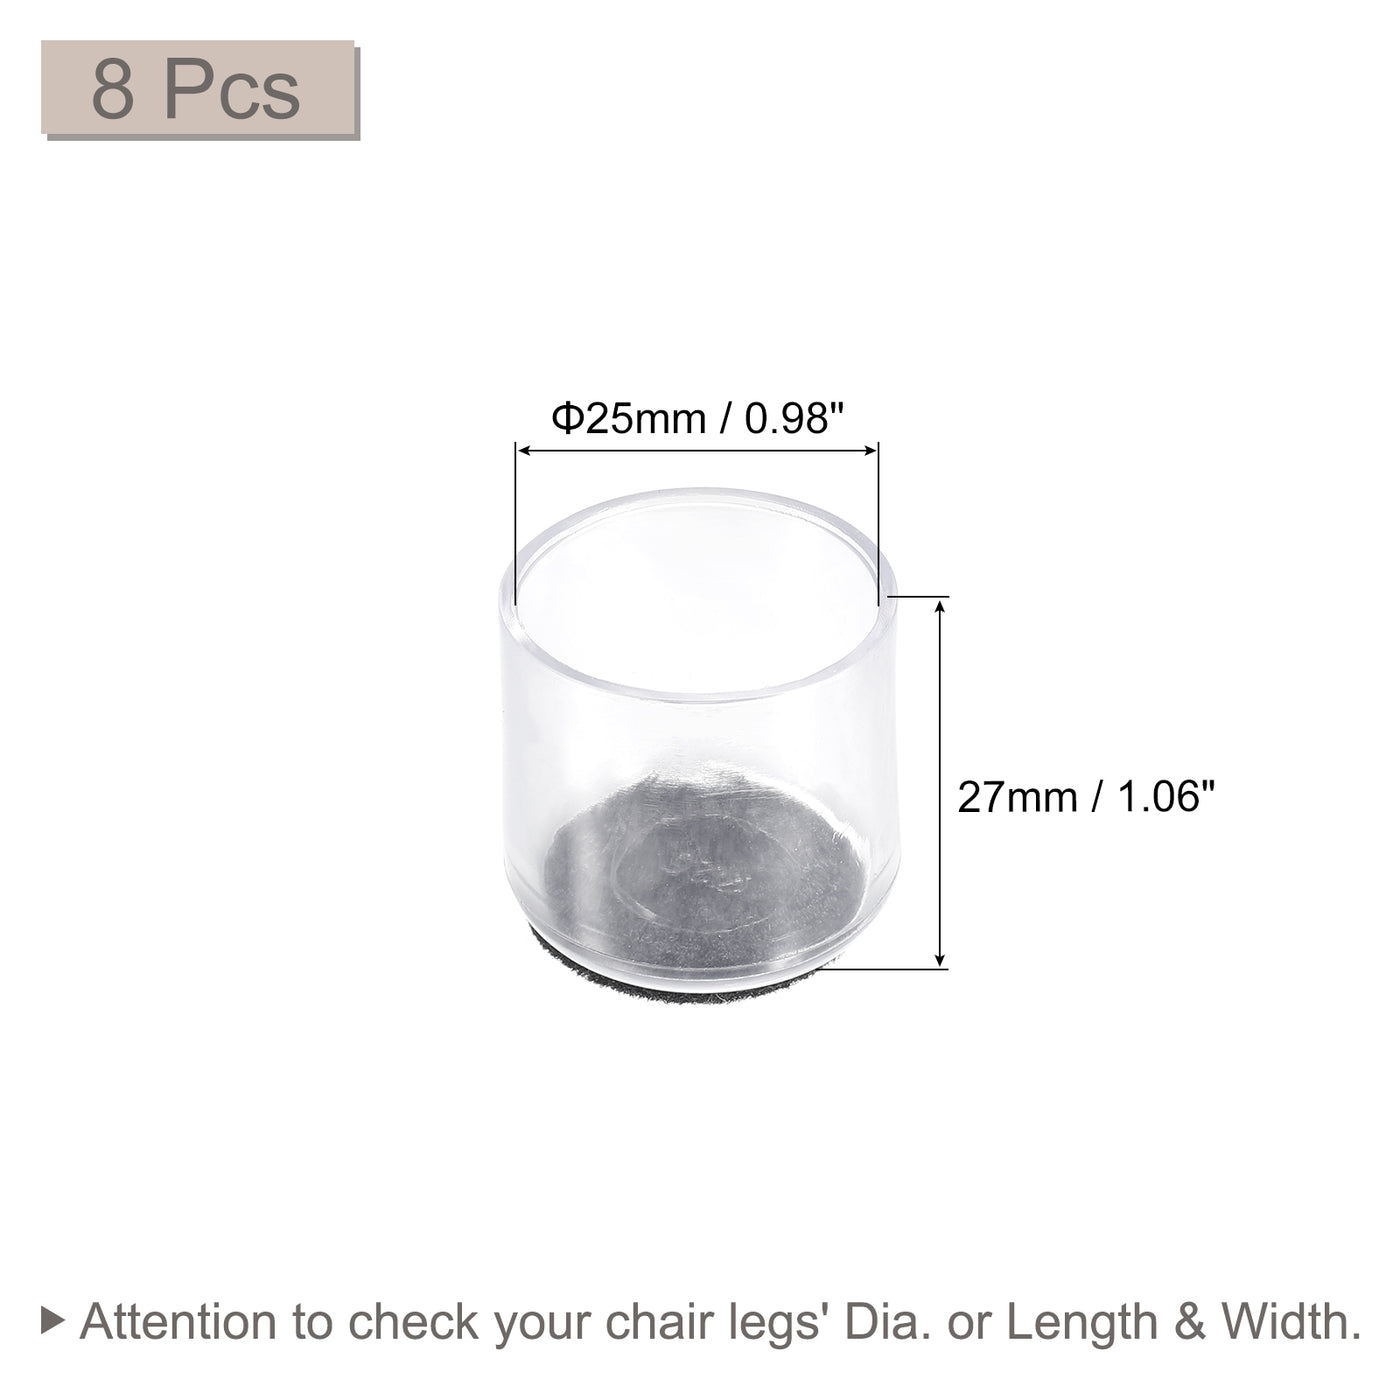 uxcell Uxcell Chair Leg Floor Protectors, 8Pcs 25mm(0.98") PVC & Felt Chair Leg Cover Caps for Hardwood Floors (Clear White)